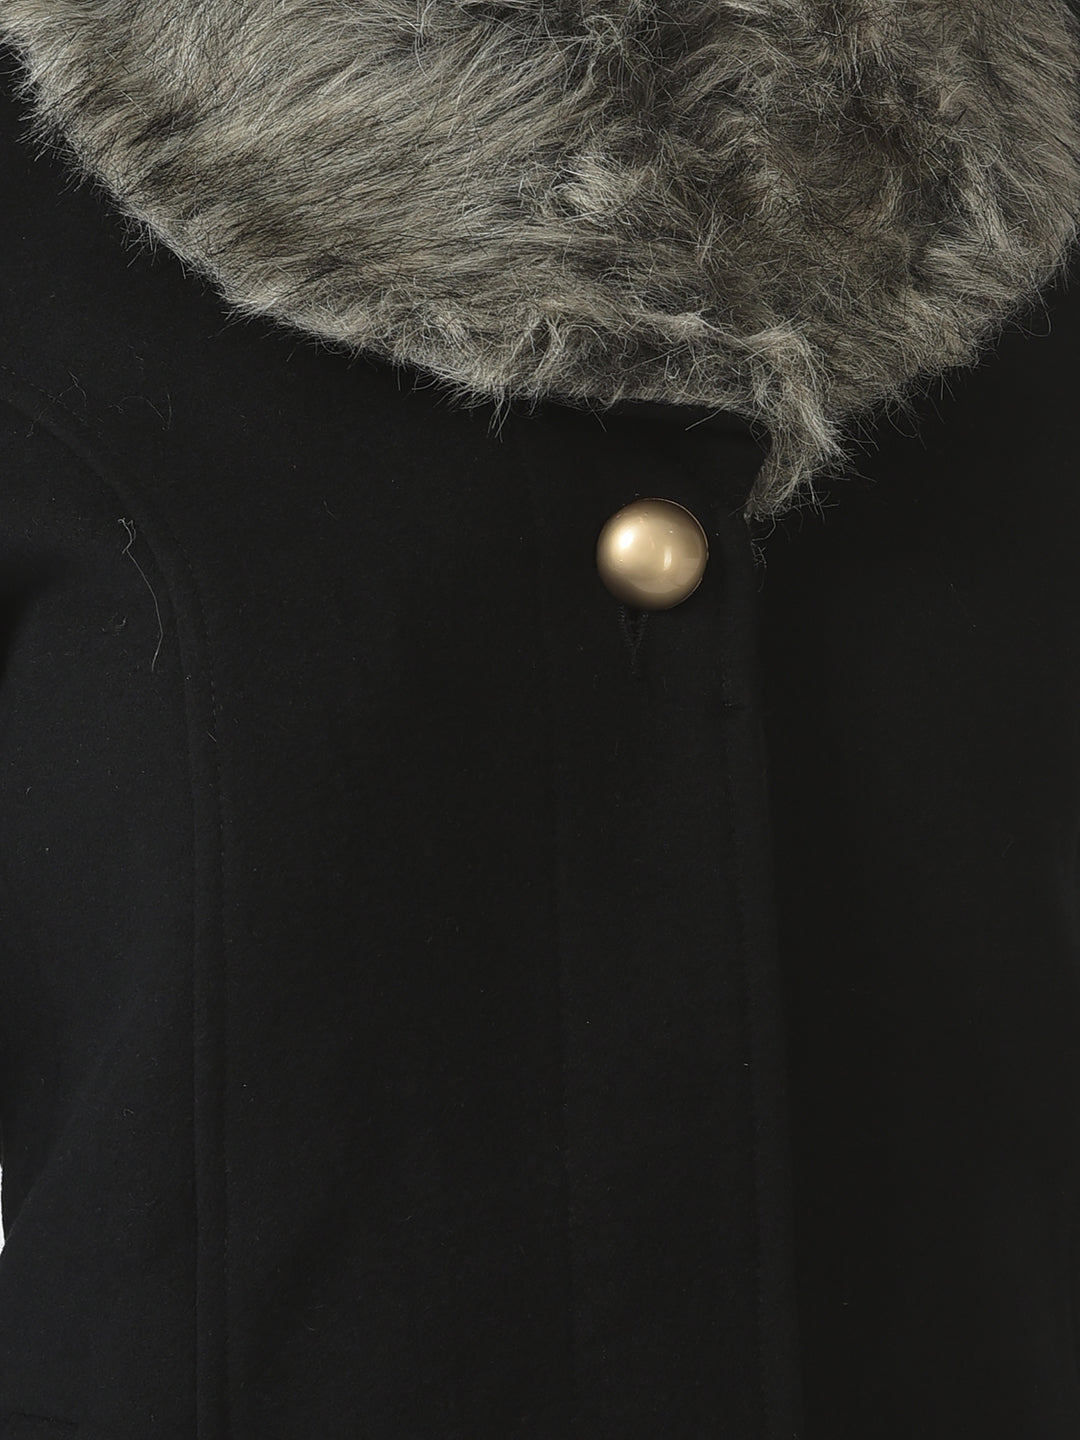  Black Fur-Neck Coat